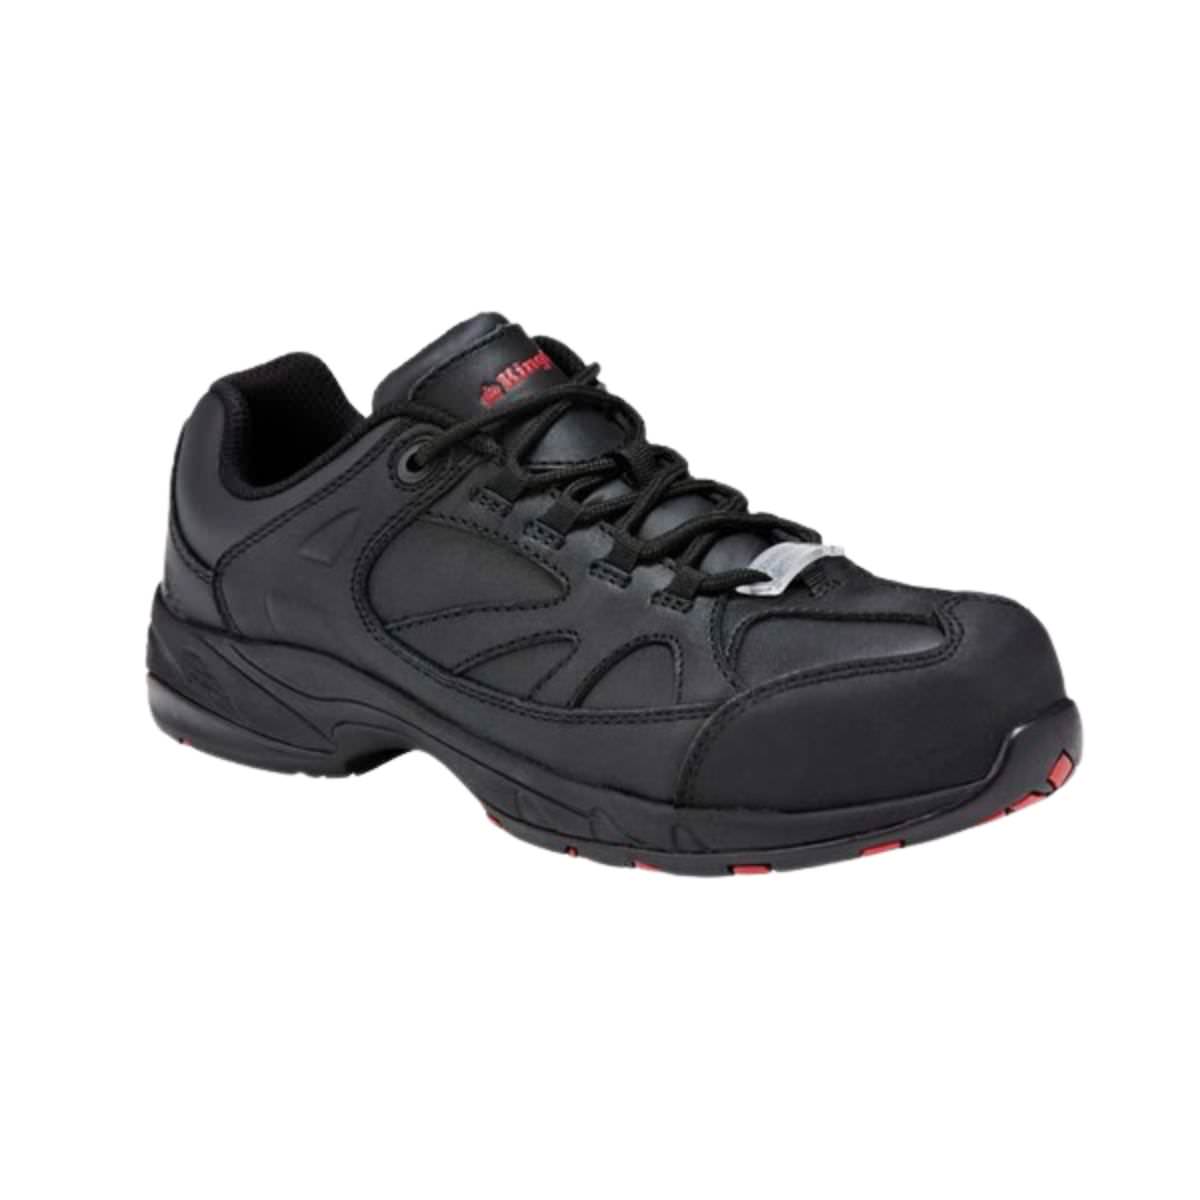 KingGee Women's Comp-Tec G7 Slip Resistant Steel Toe Safety Shoes K26610